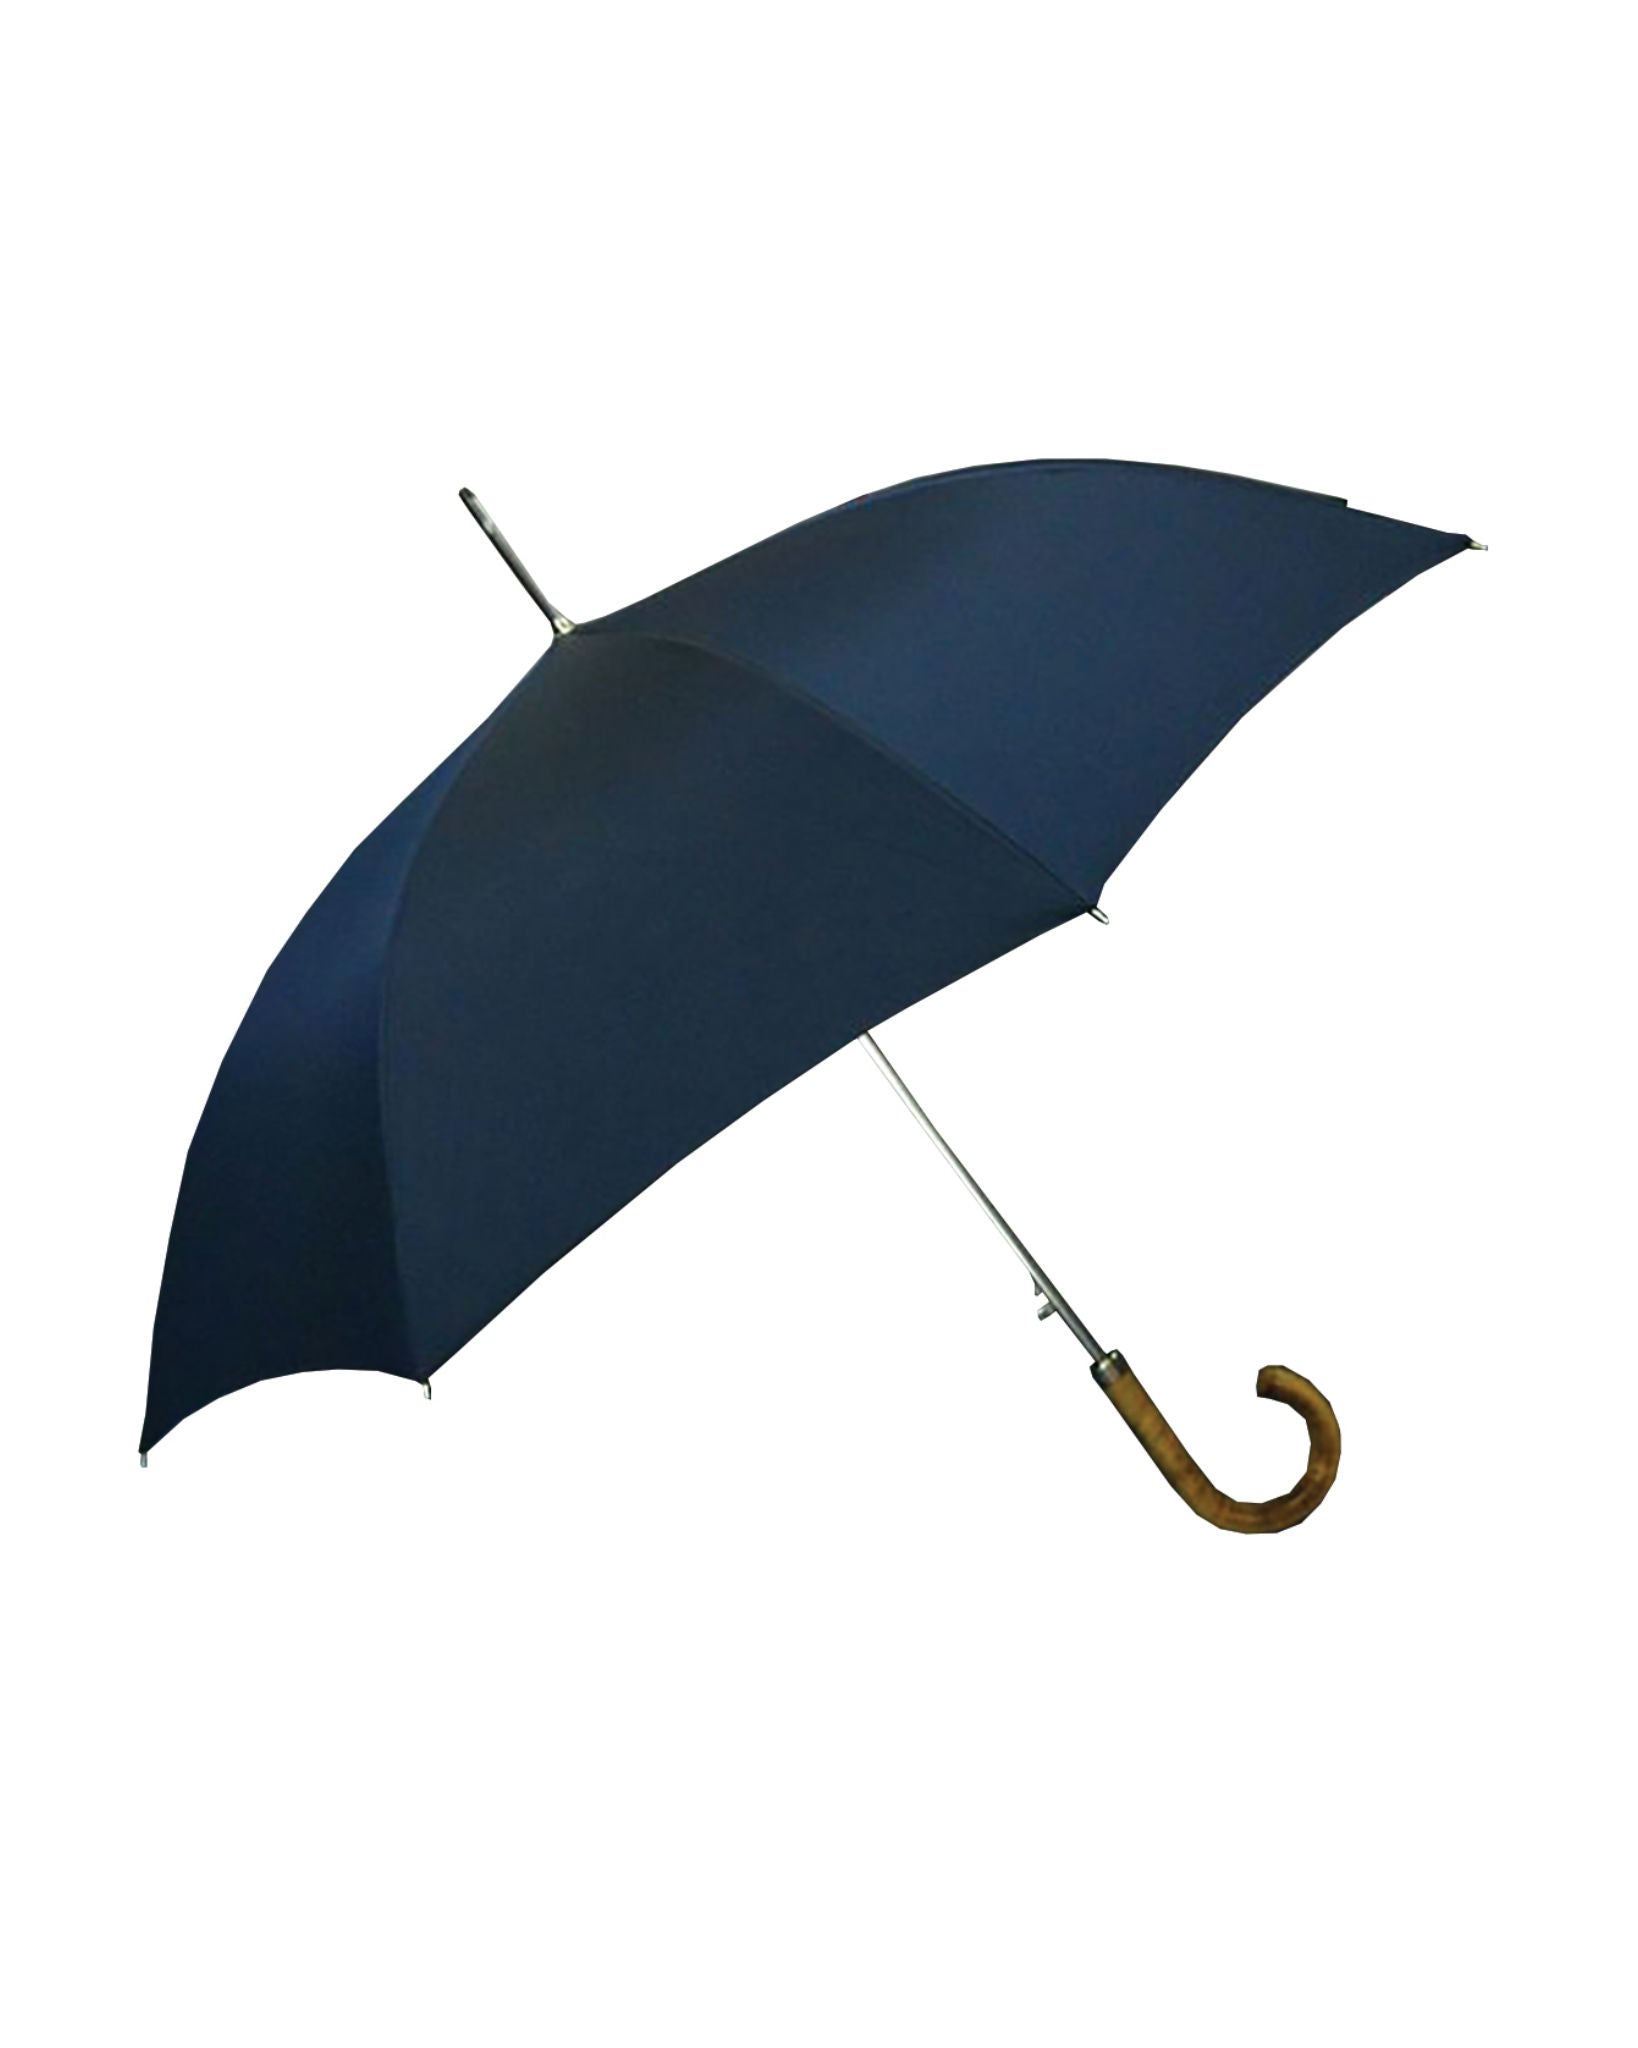 Uppingham Umbrella - Navy